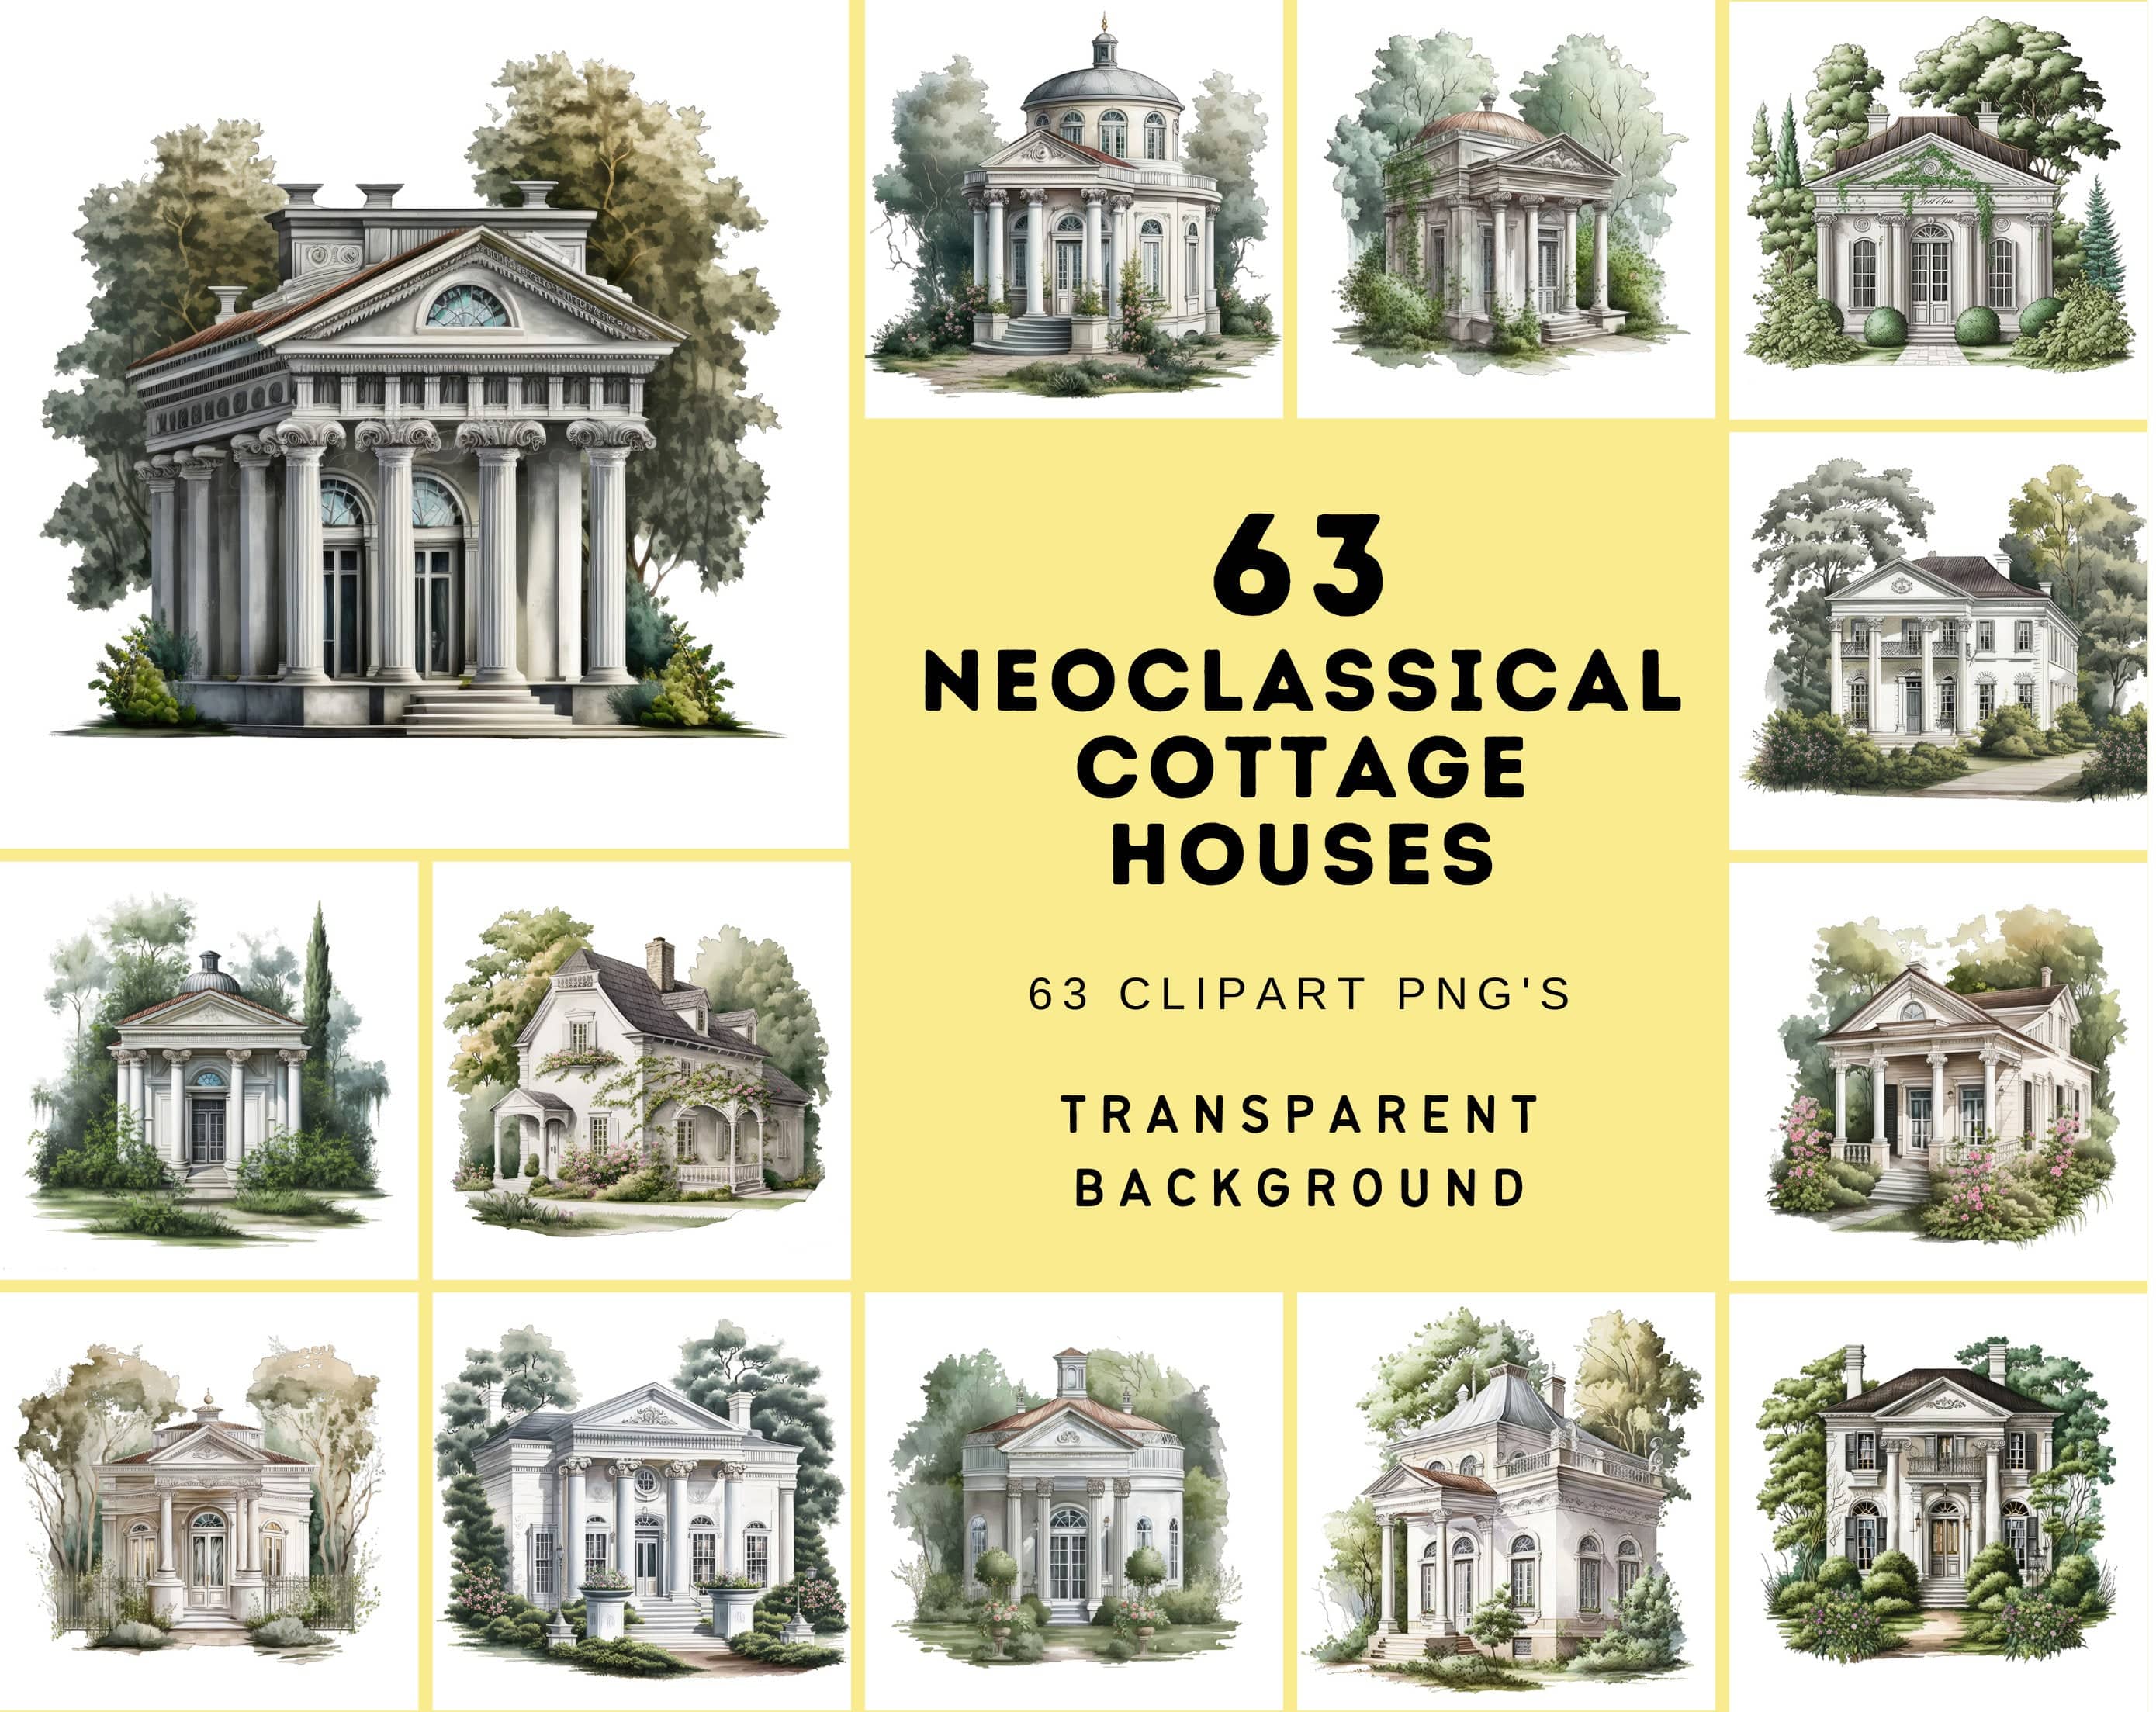 Neoclassical Cottage Houses Clipart Bundle - 63 PNG Transparent Images for Commercial Use, Perfect for Websites, Invitations, Prints. Digital Download Sumobundle